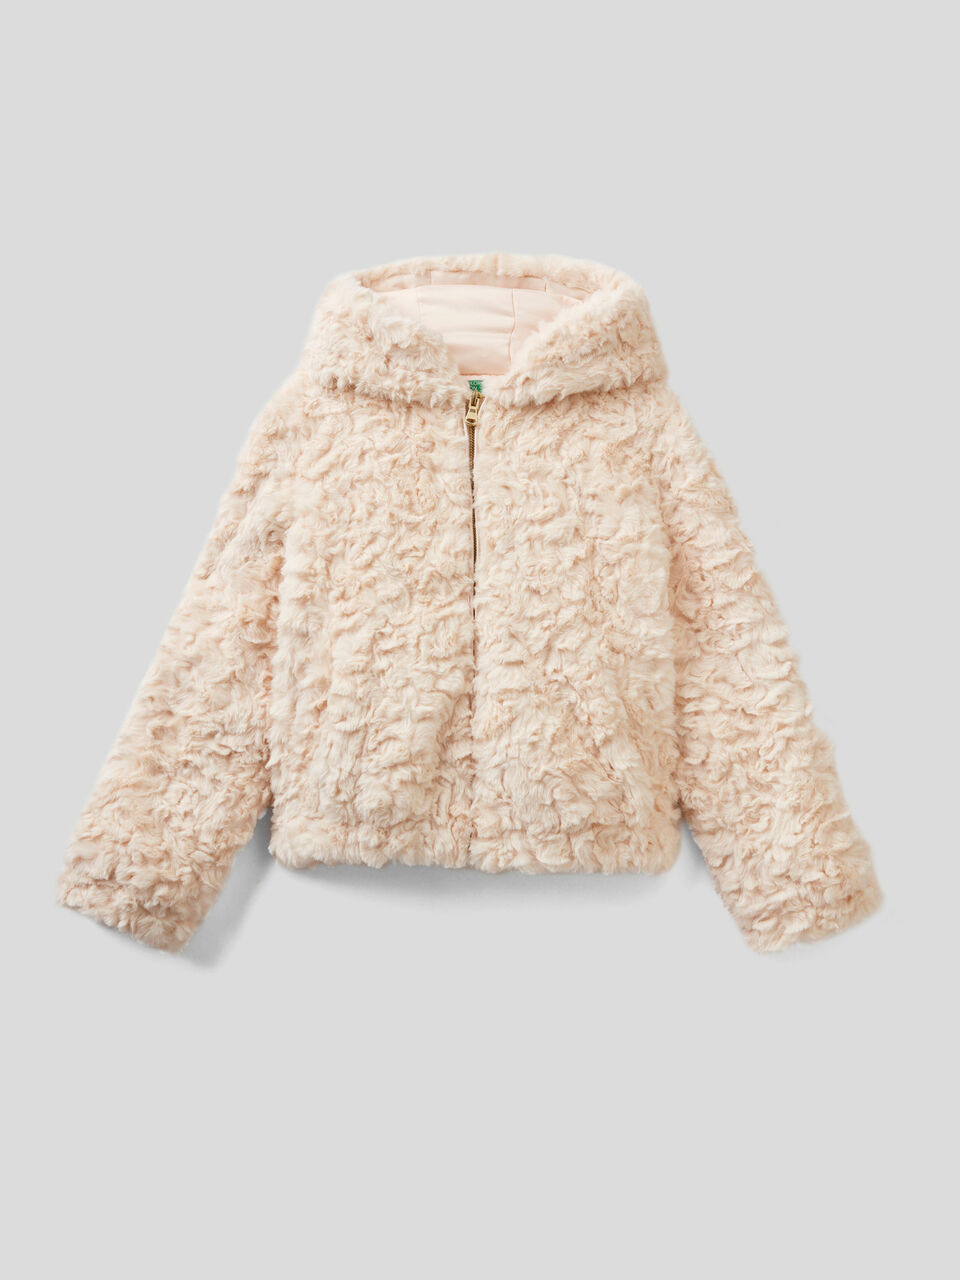 💥LOUIS VUITTON💥 Beige Jacket with fur hoodies